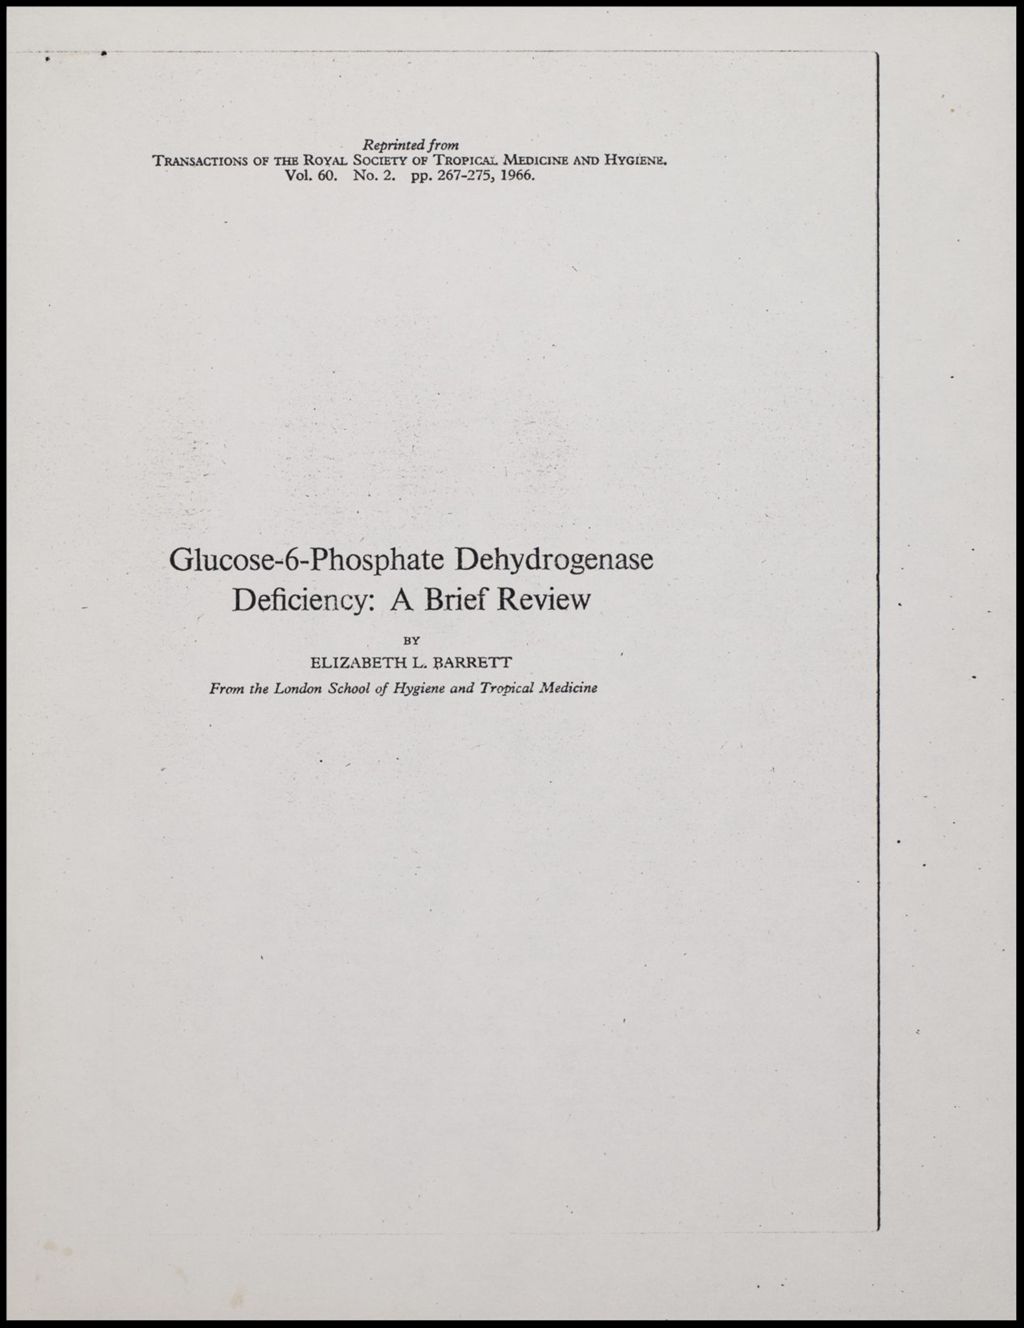 Miniature of Distribution of Black Physicians, 1967 (Folder III-186)